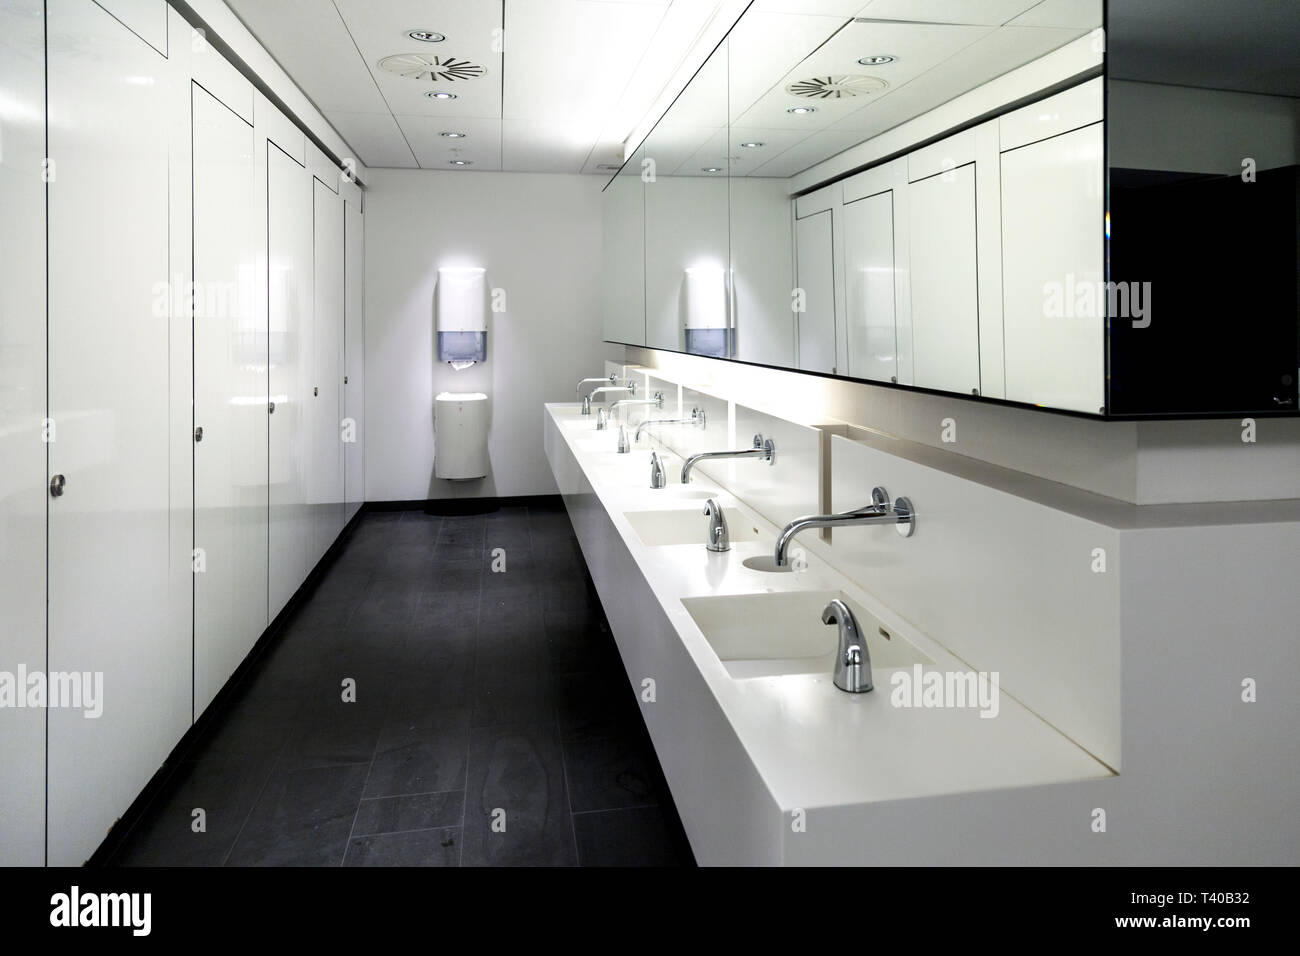 Monochromatic Contemporary Public Bathroom Interior Stock